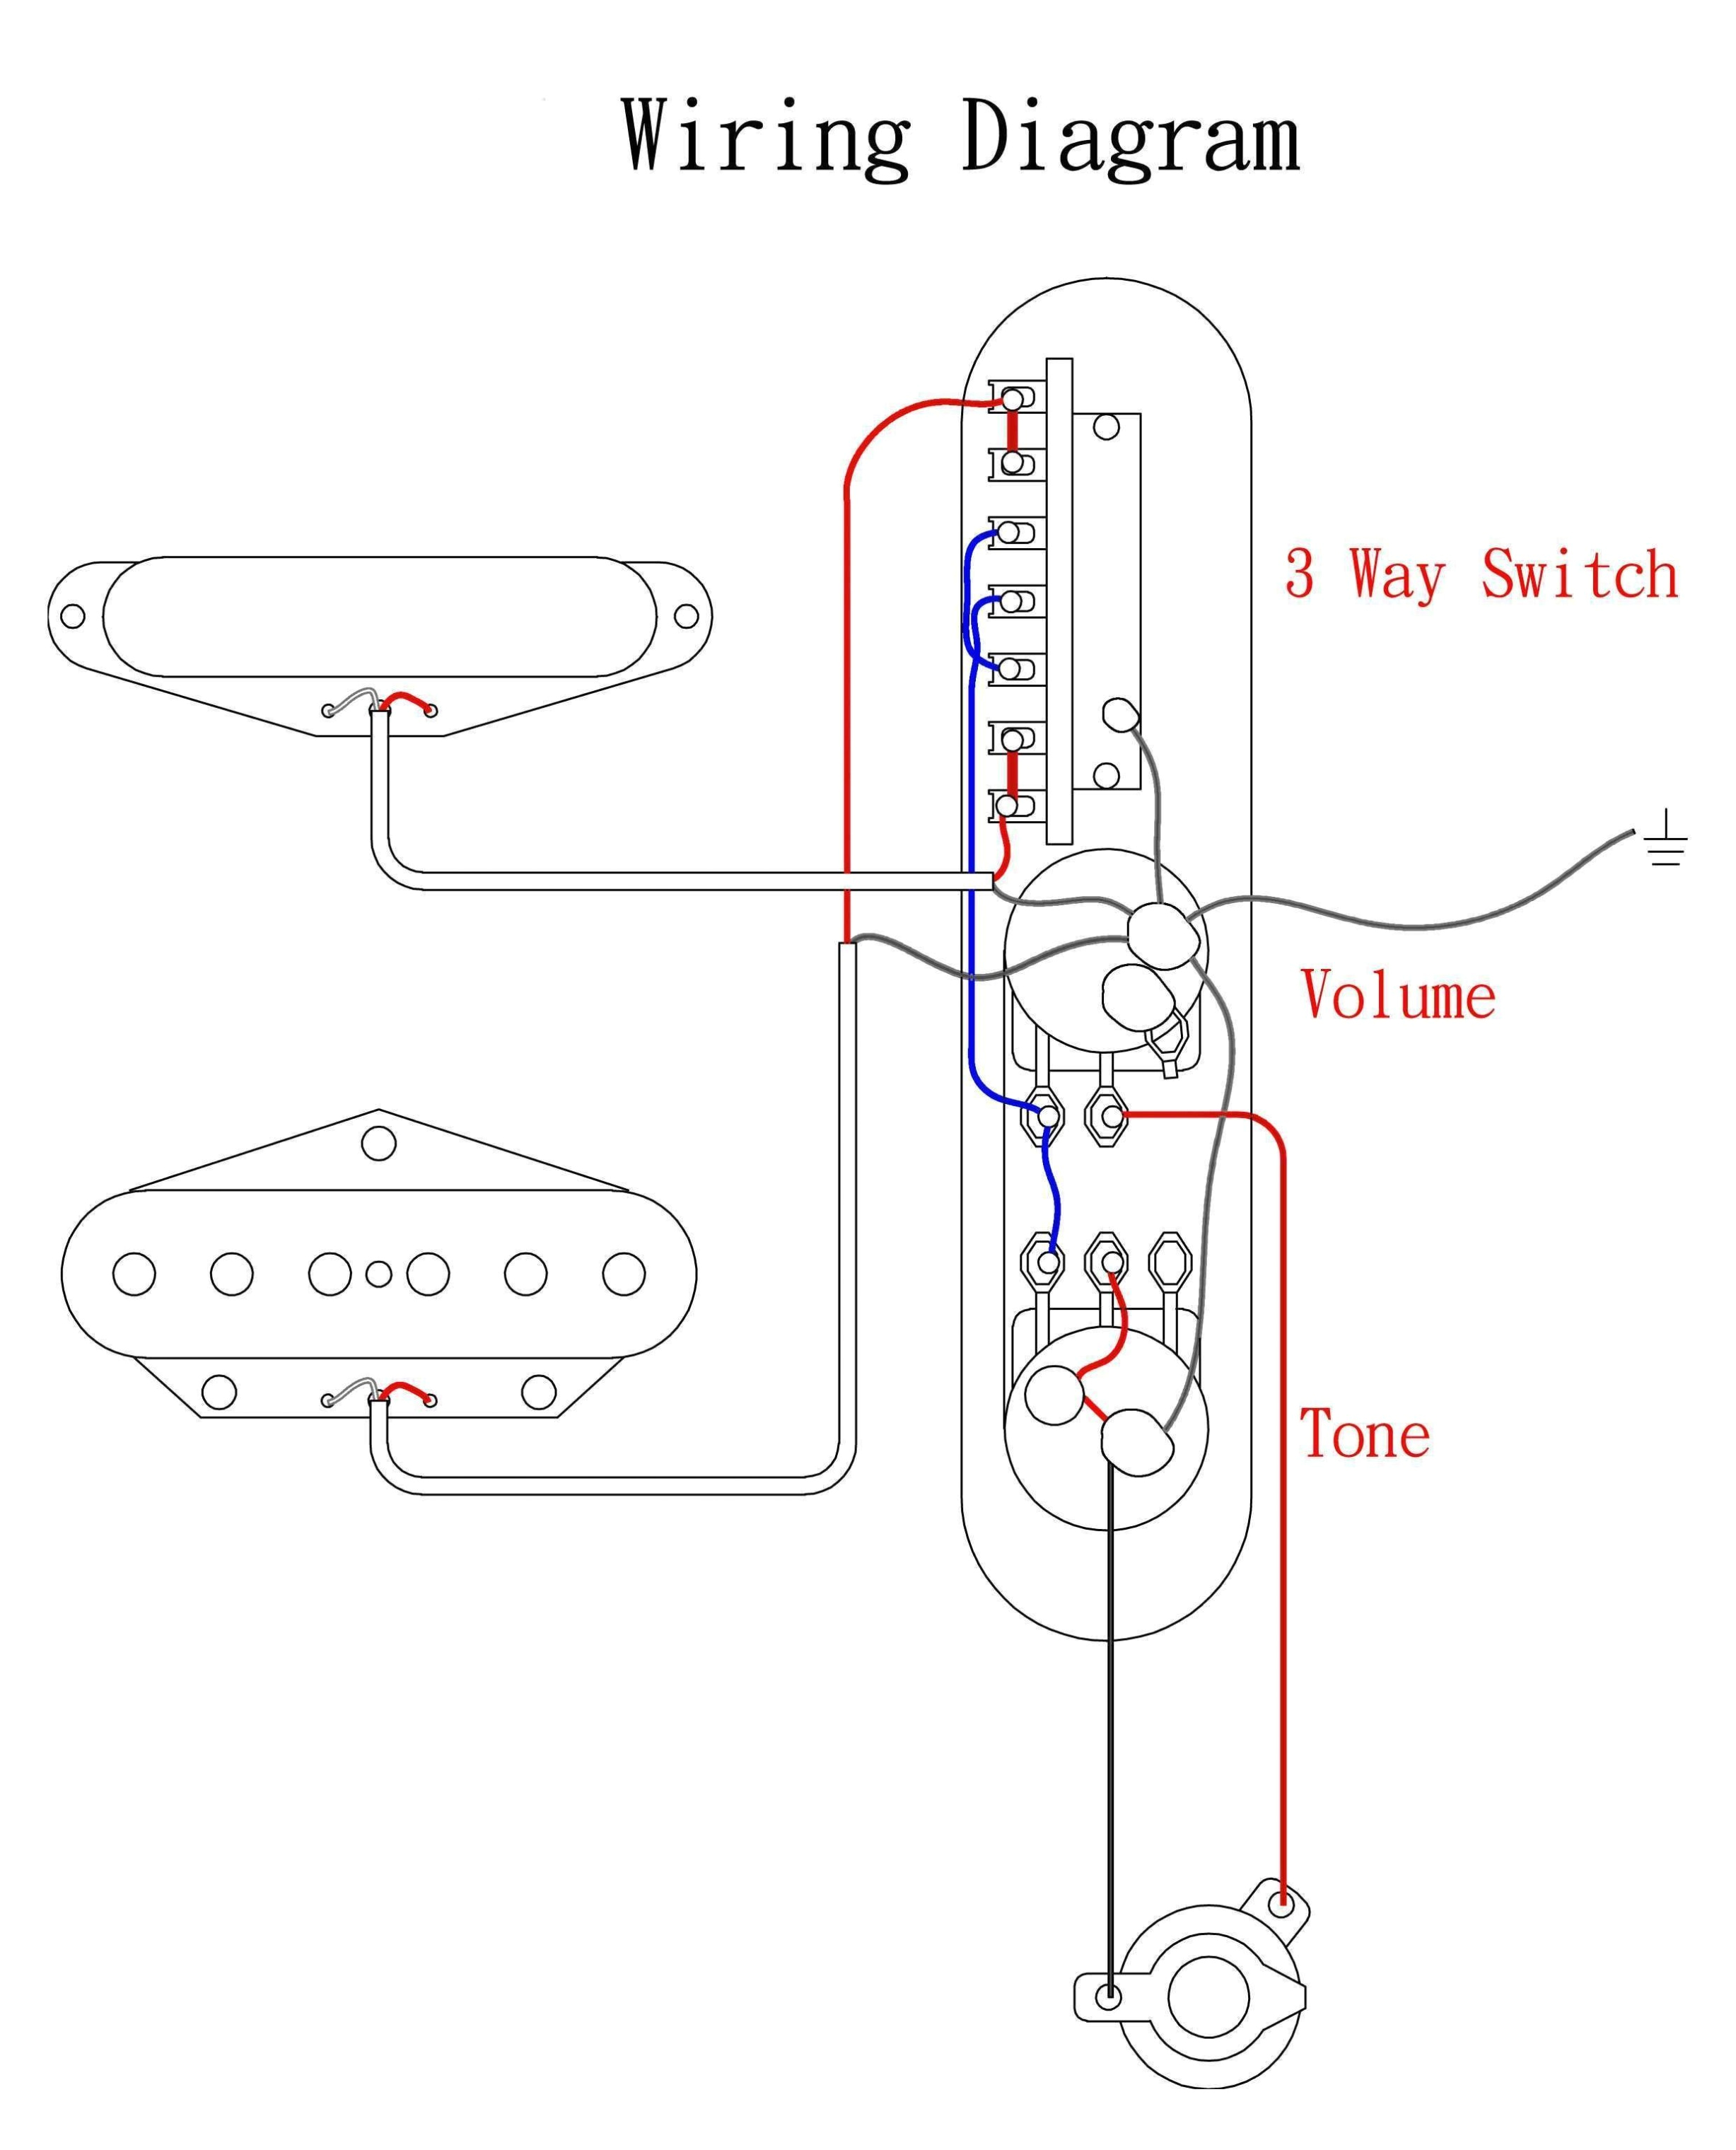 3 way switch wiring telecaster diagram stewmac wiring diagram preview telecaster 3 way switch wiring diagram